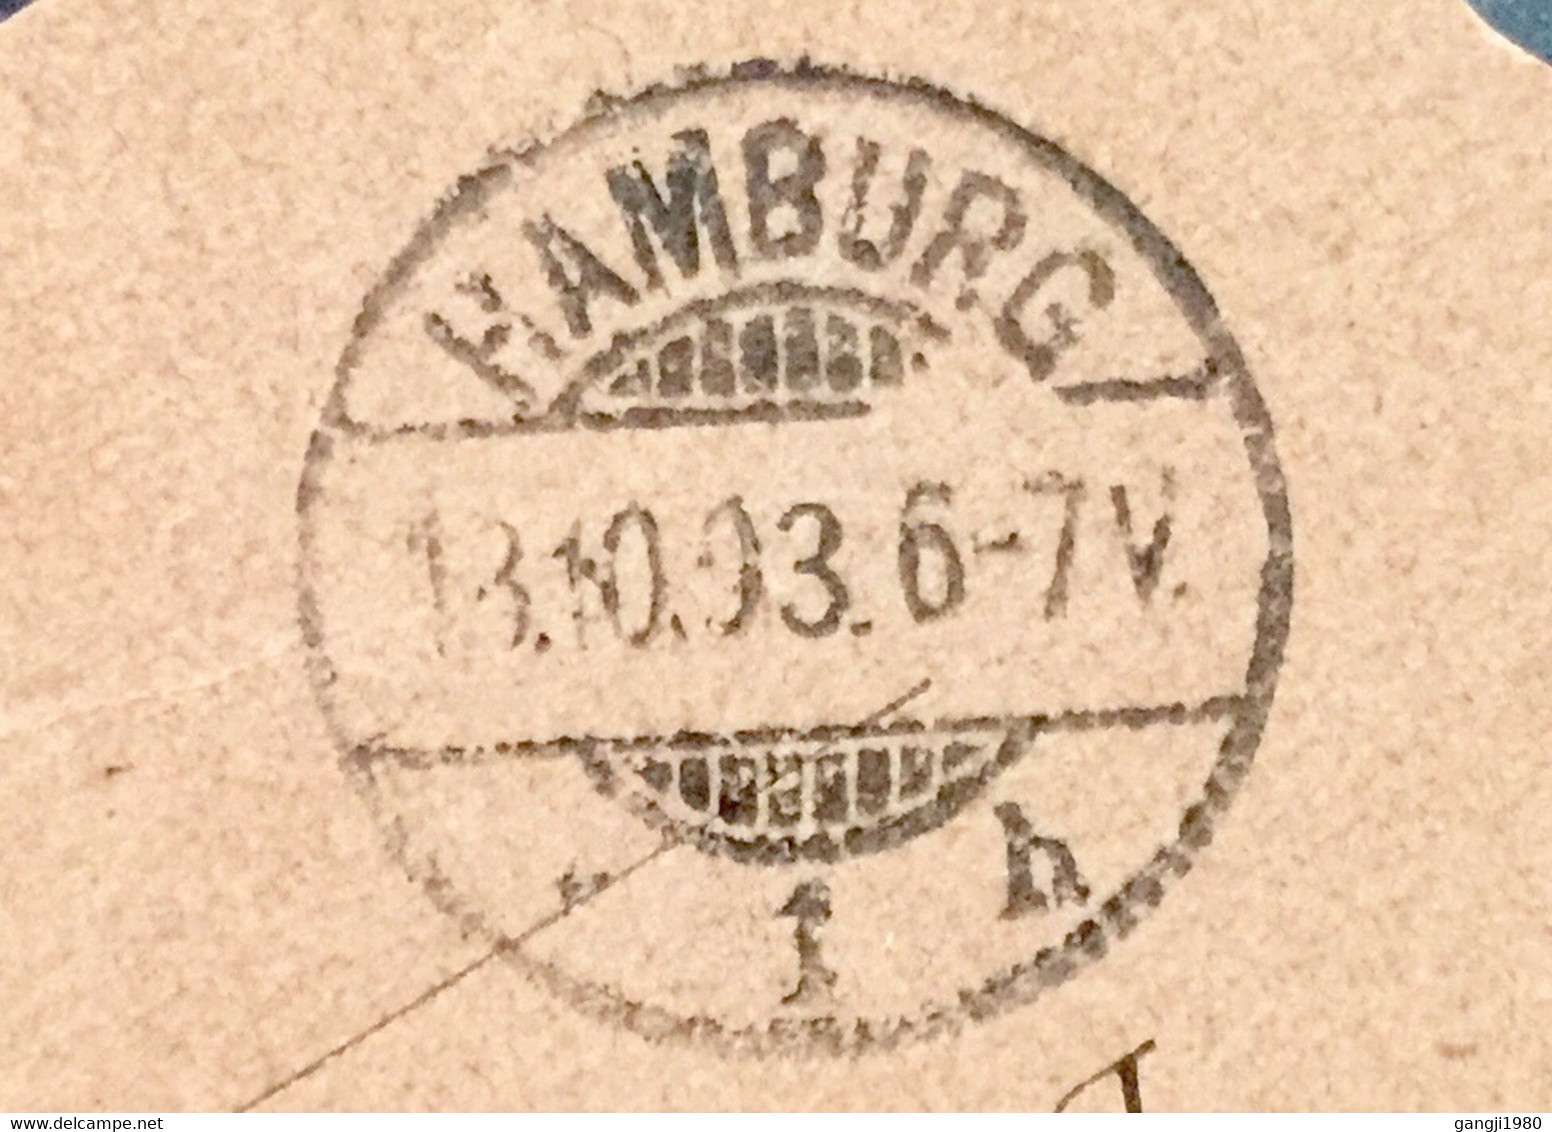 ROMANIA 1893 STATIONARY+ KING CAROL STAMP LASI TO HAMBURG GERMANY - Covers & Documents